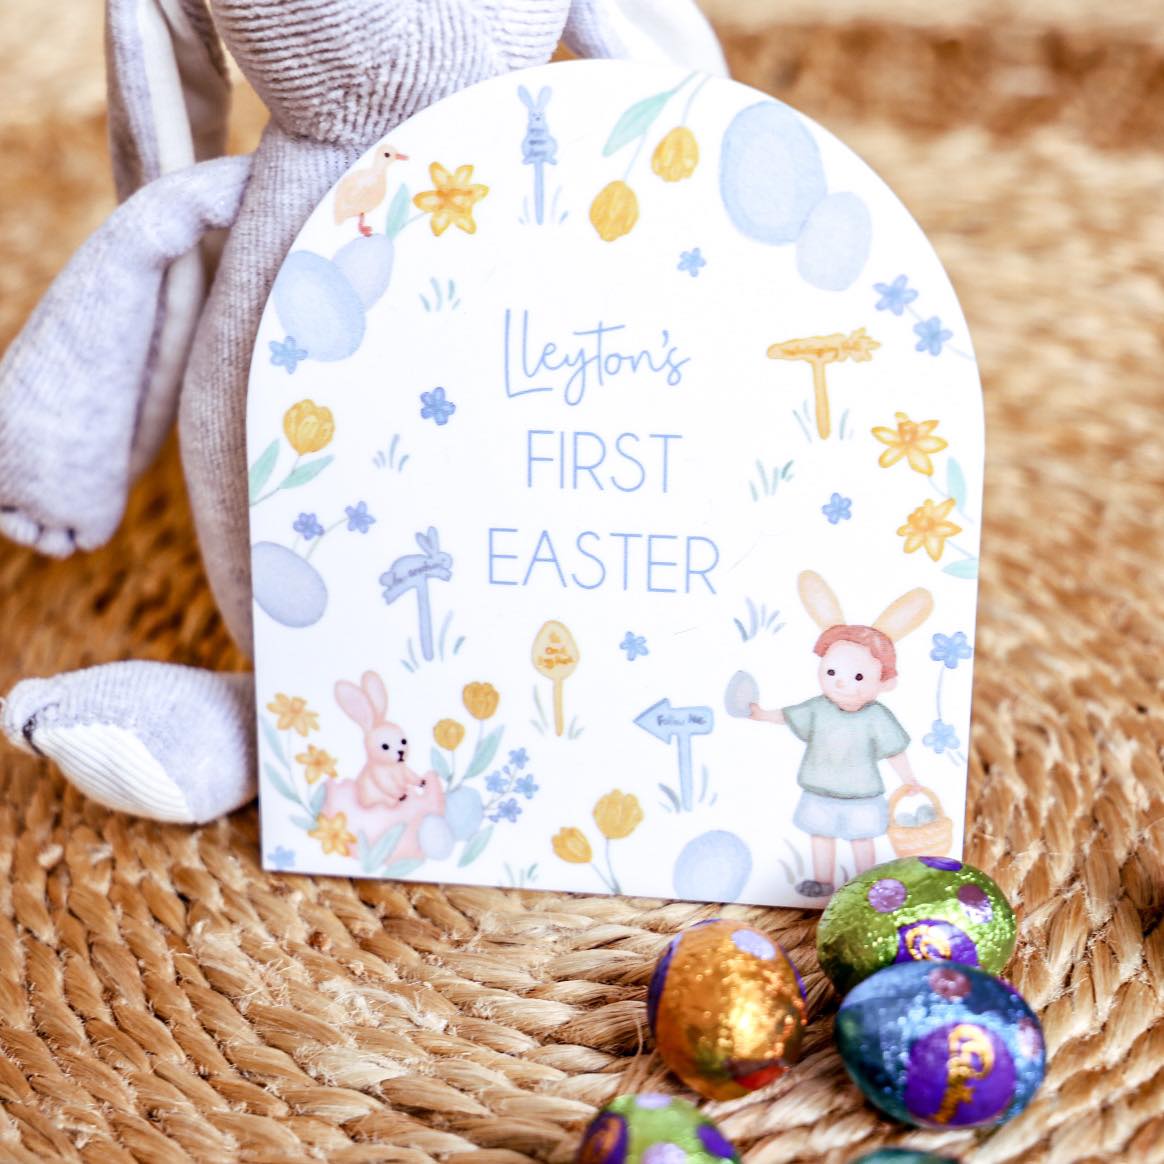 My First Easter Milestone Printed - Easter Egg Hunt Design